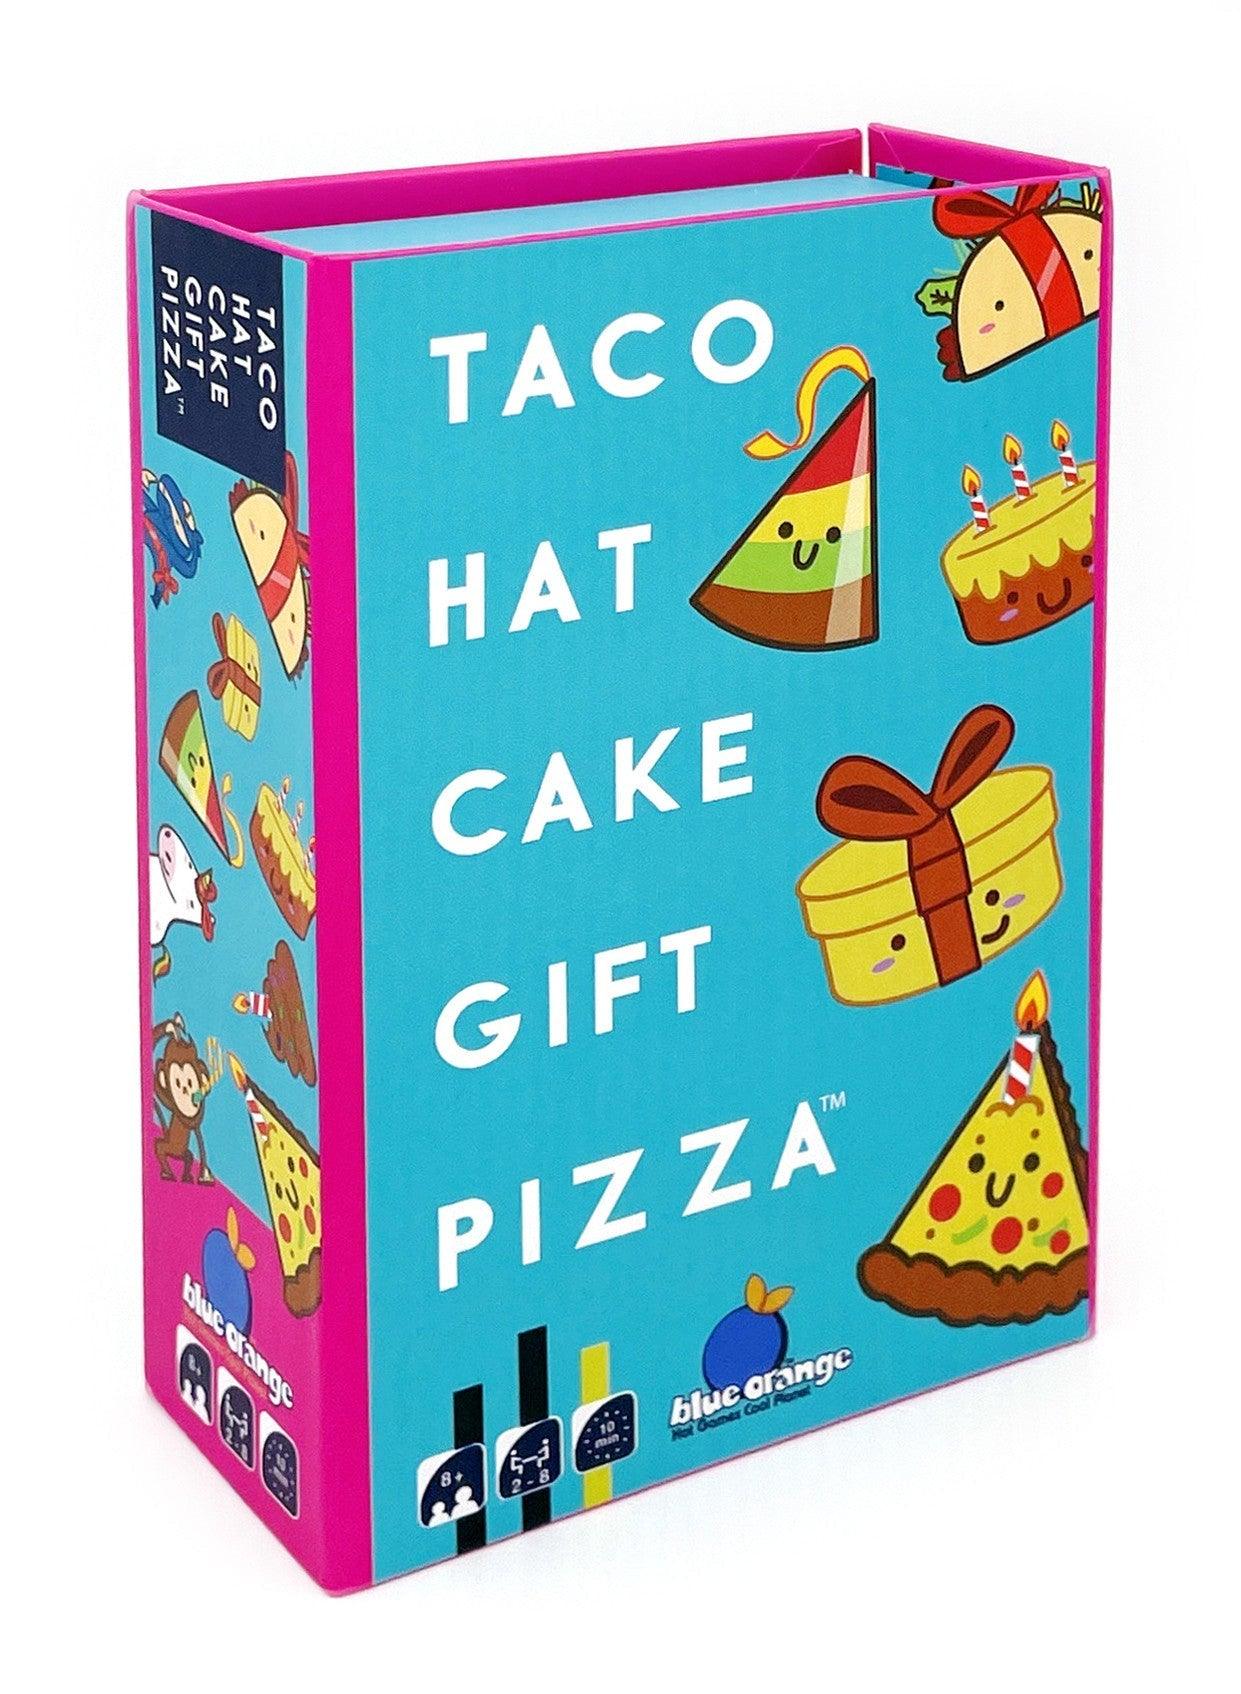 VR-90909 Taco Hat Cake Gift Pizza - Blue Orange Games - Titan Pop Culture